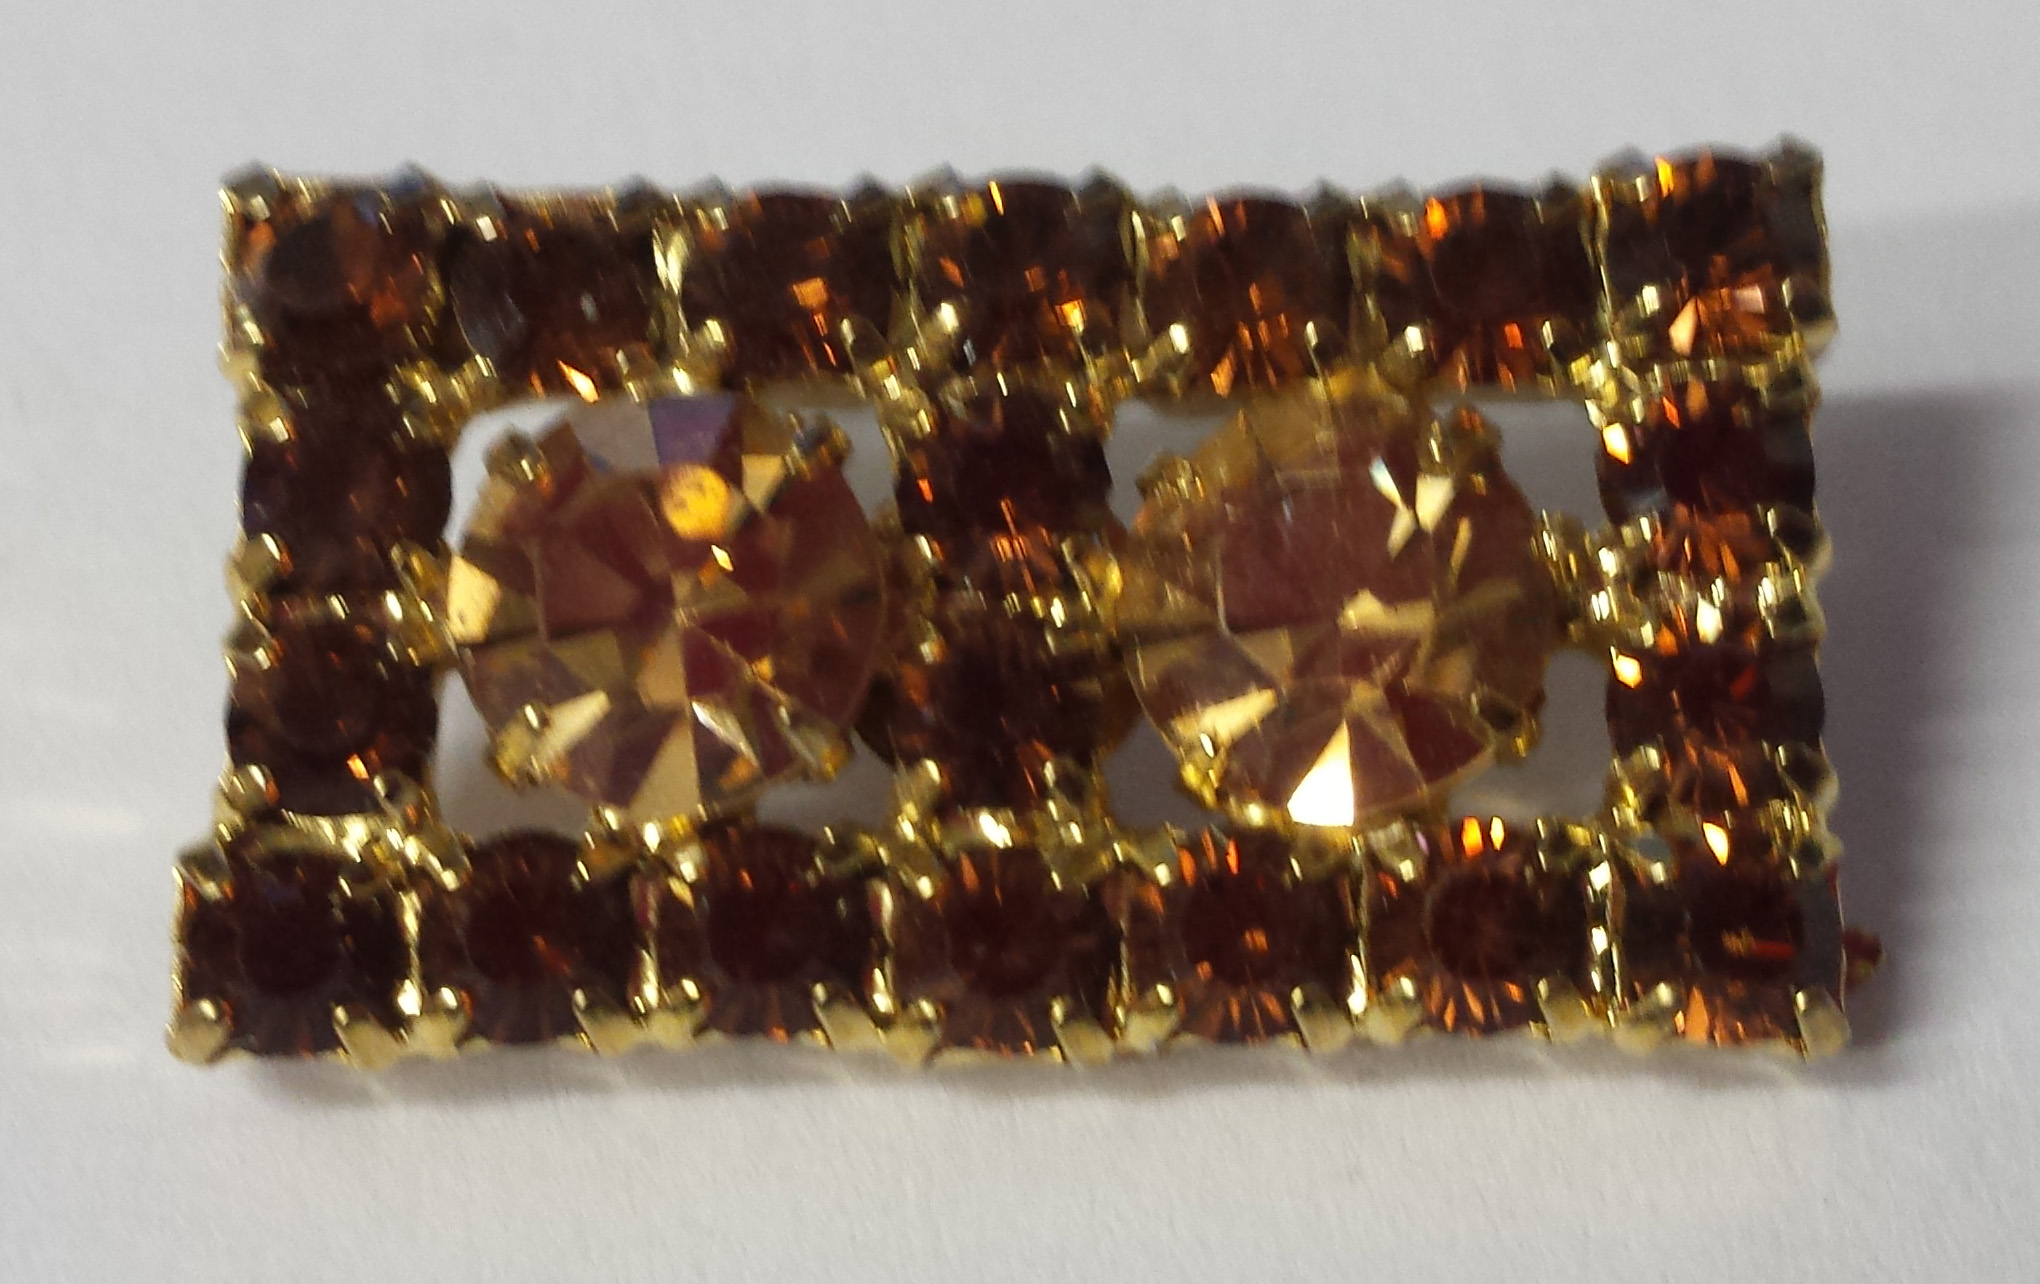 Dazzling Rectangular Rhinestone Button Two Tone Amber with Black Back - 1 inch by 1/2 inch #Daz0028